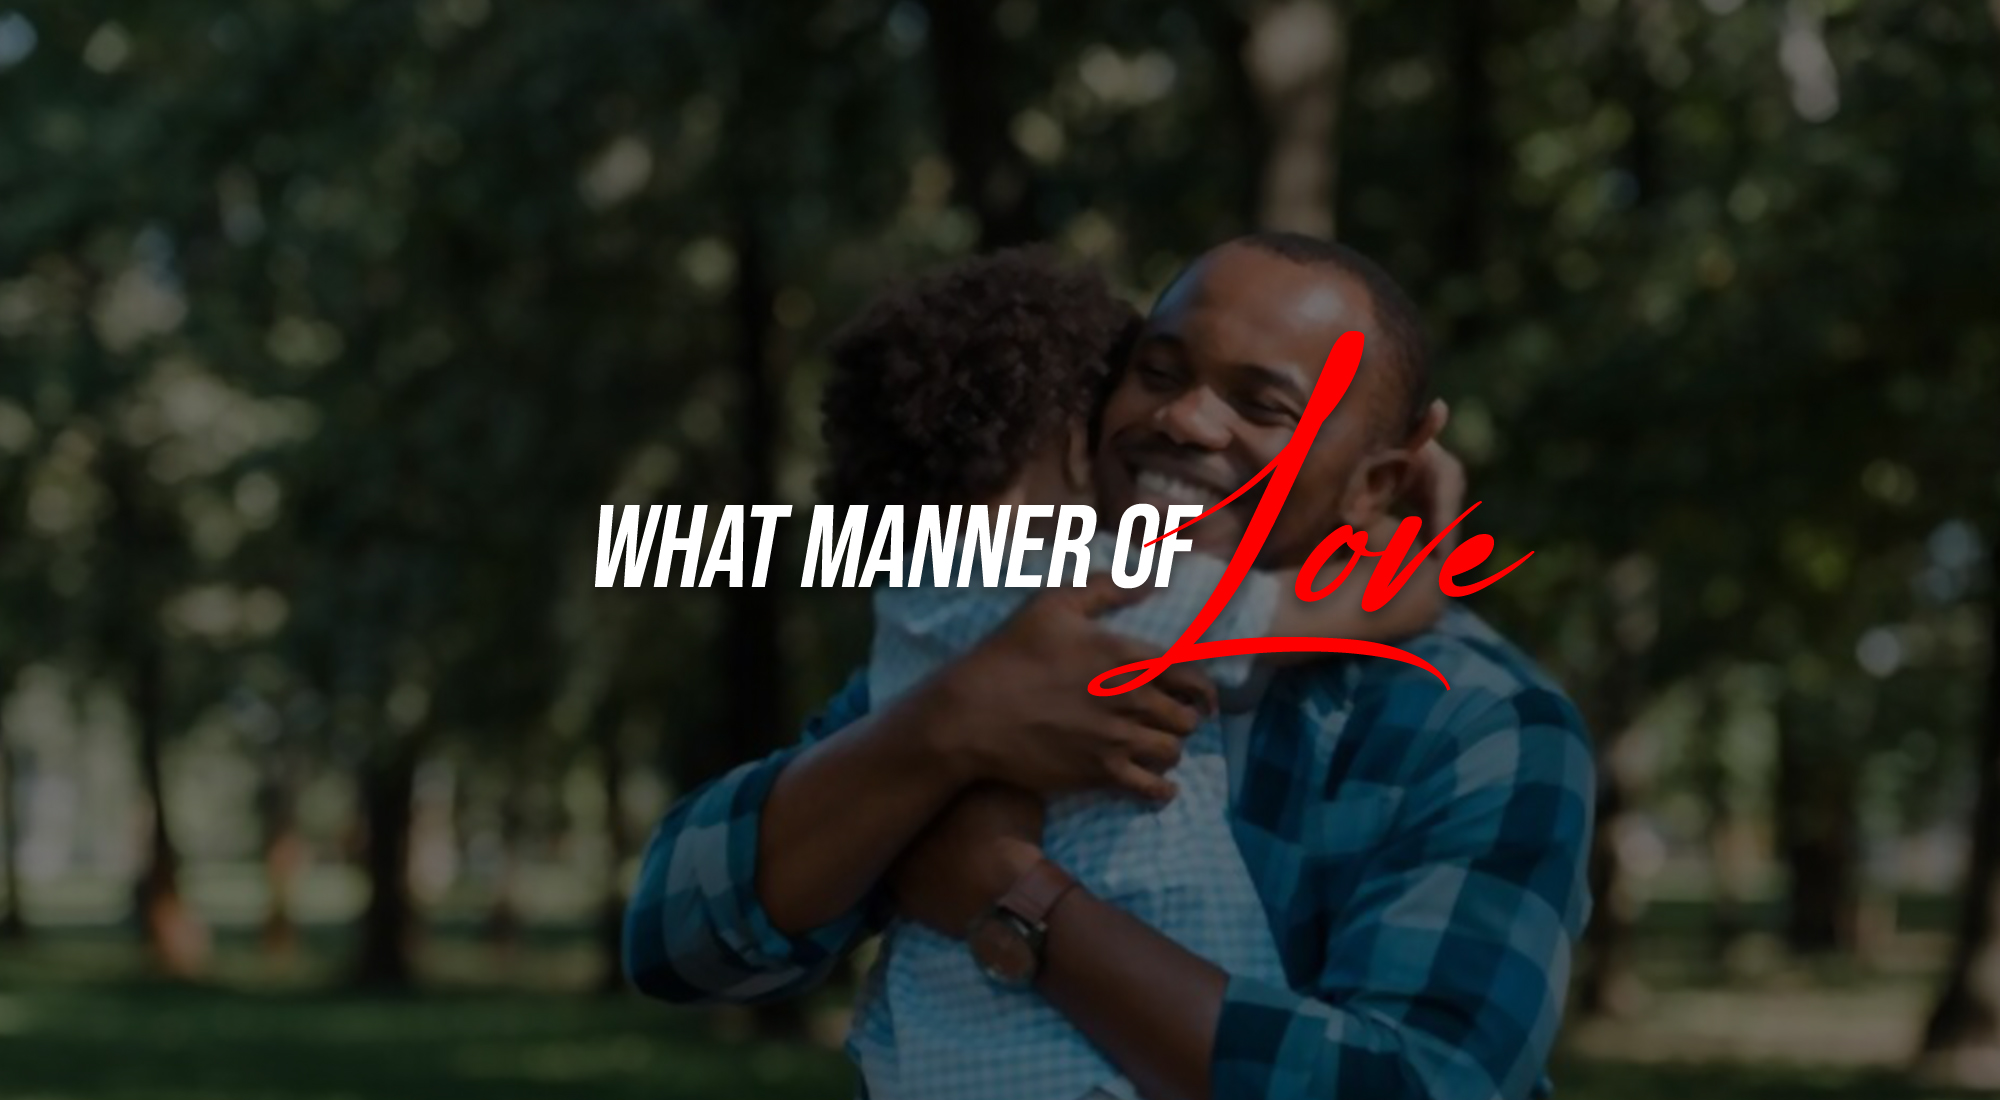 MANNER OF LOVE